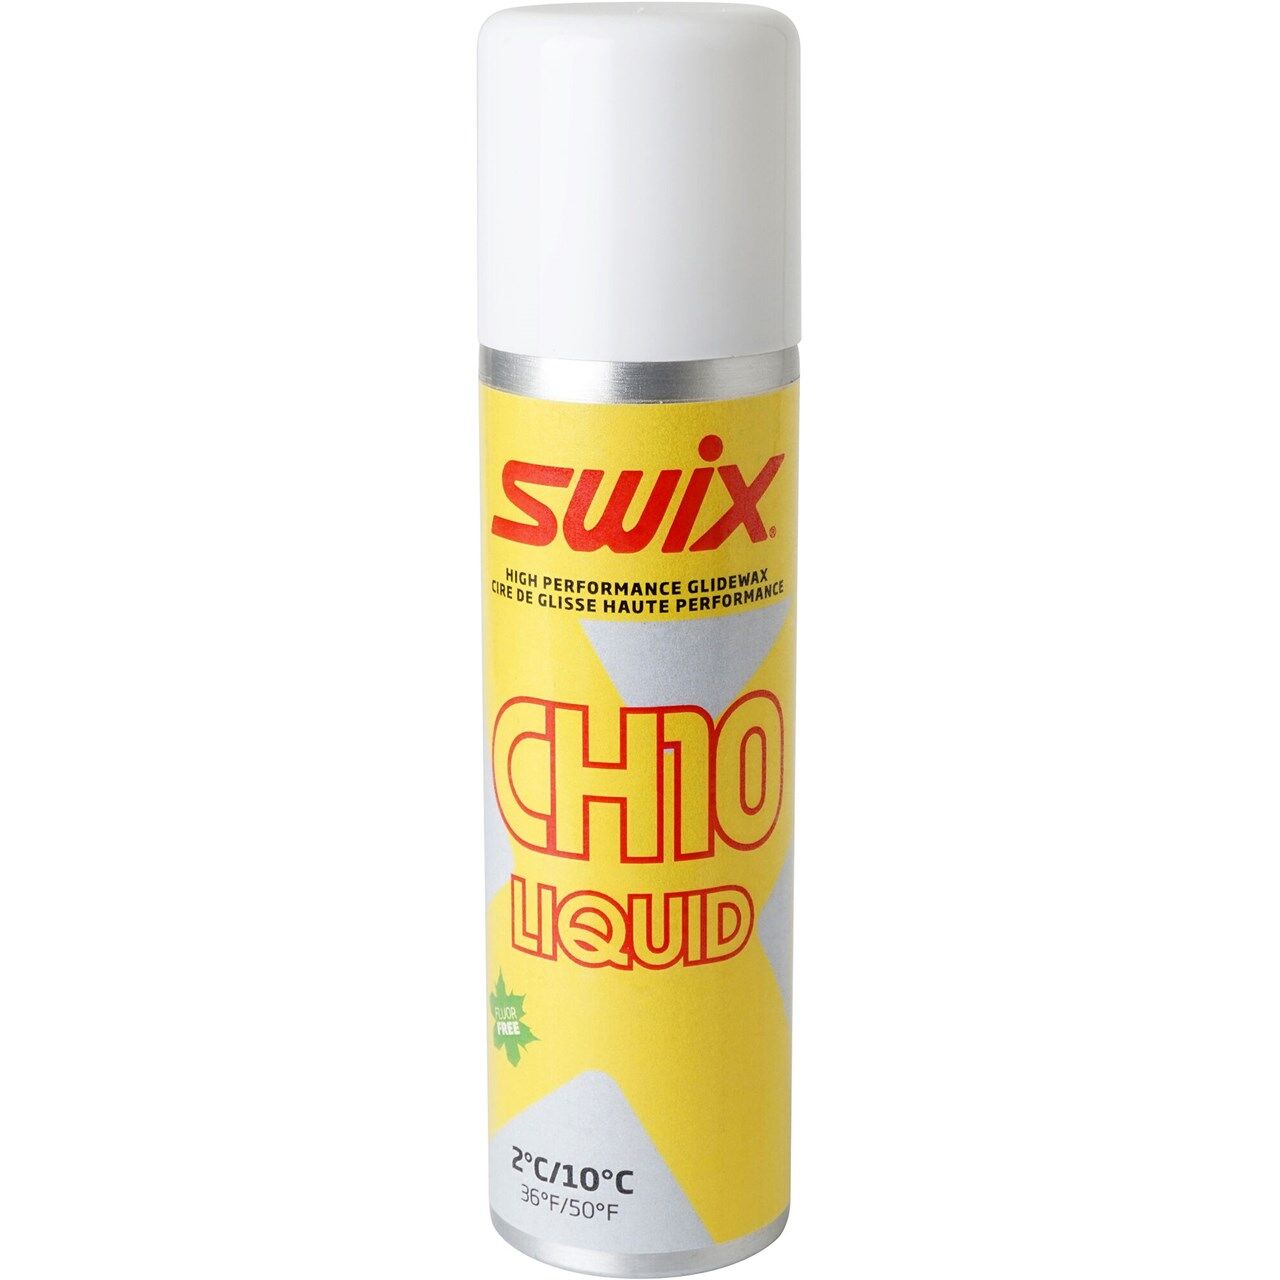 Swix CH10X Liquid 2C/10C (125ml) - Ski Vax